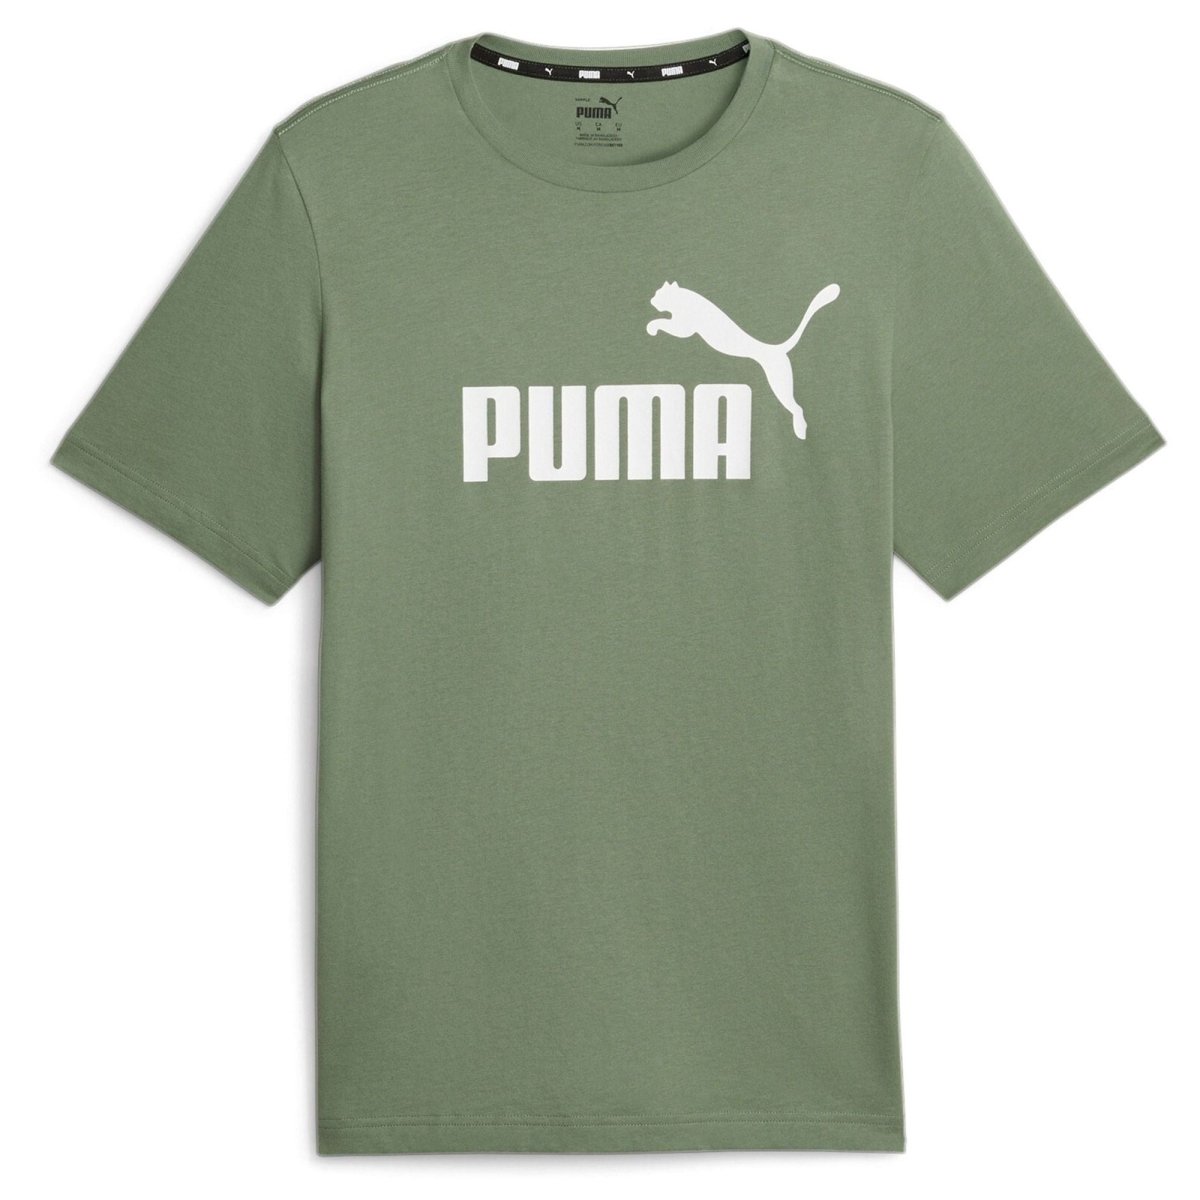 Puma PUMA MEN'S ESSENTIALS LOGO GREEN TEE - INSPORT